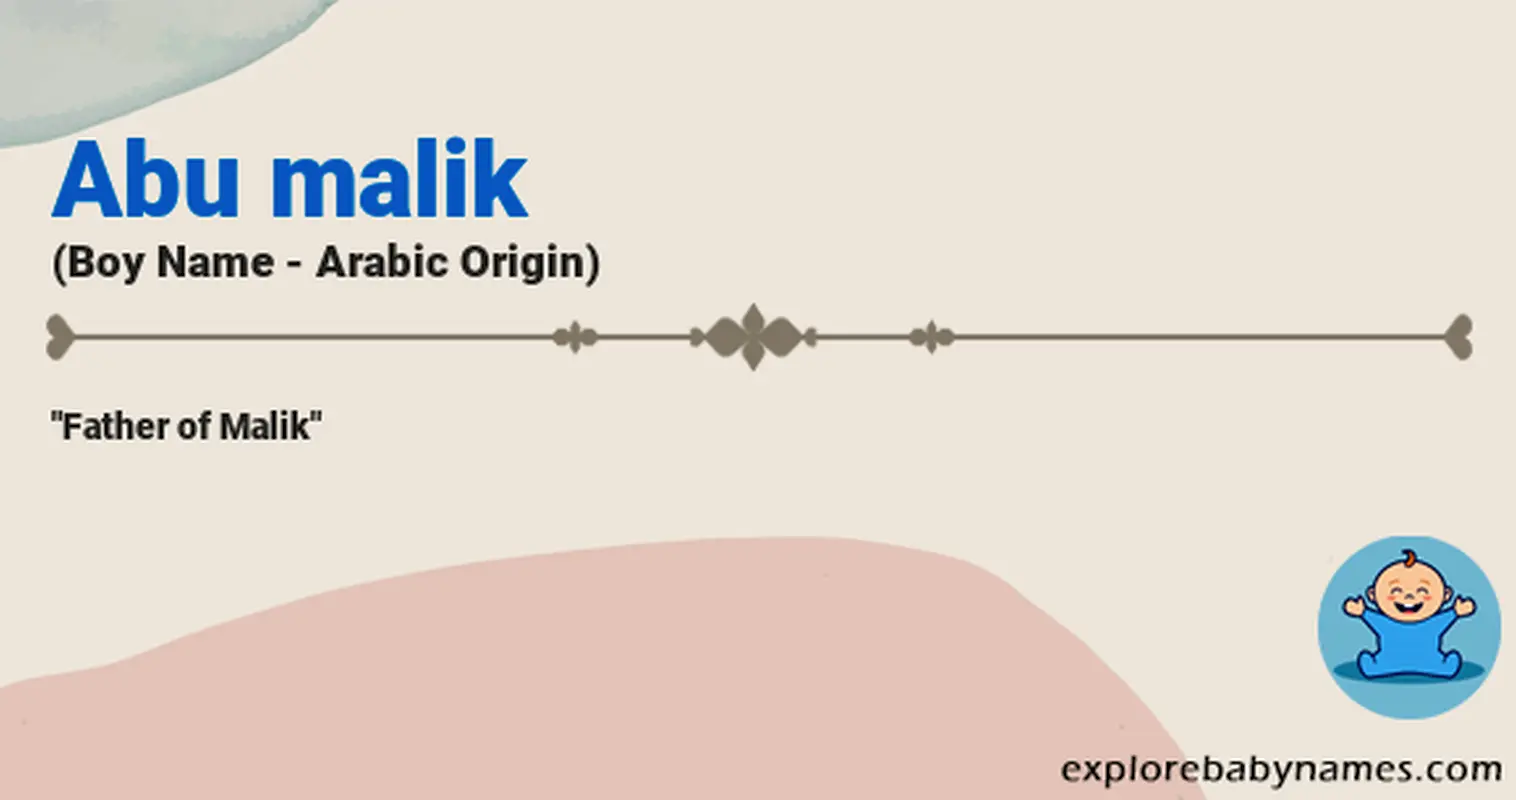 Meaning of Abu malik